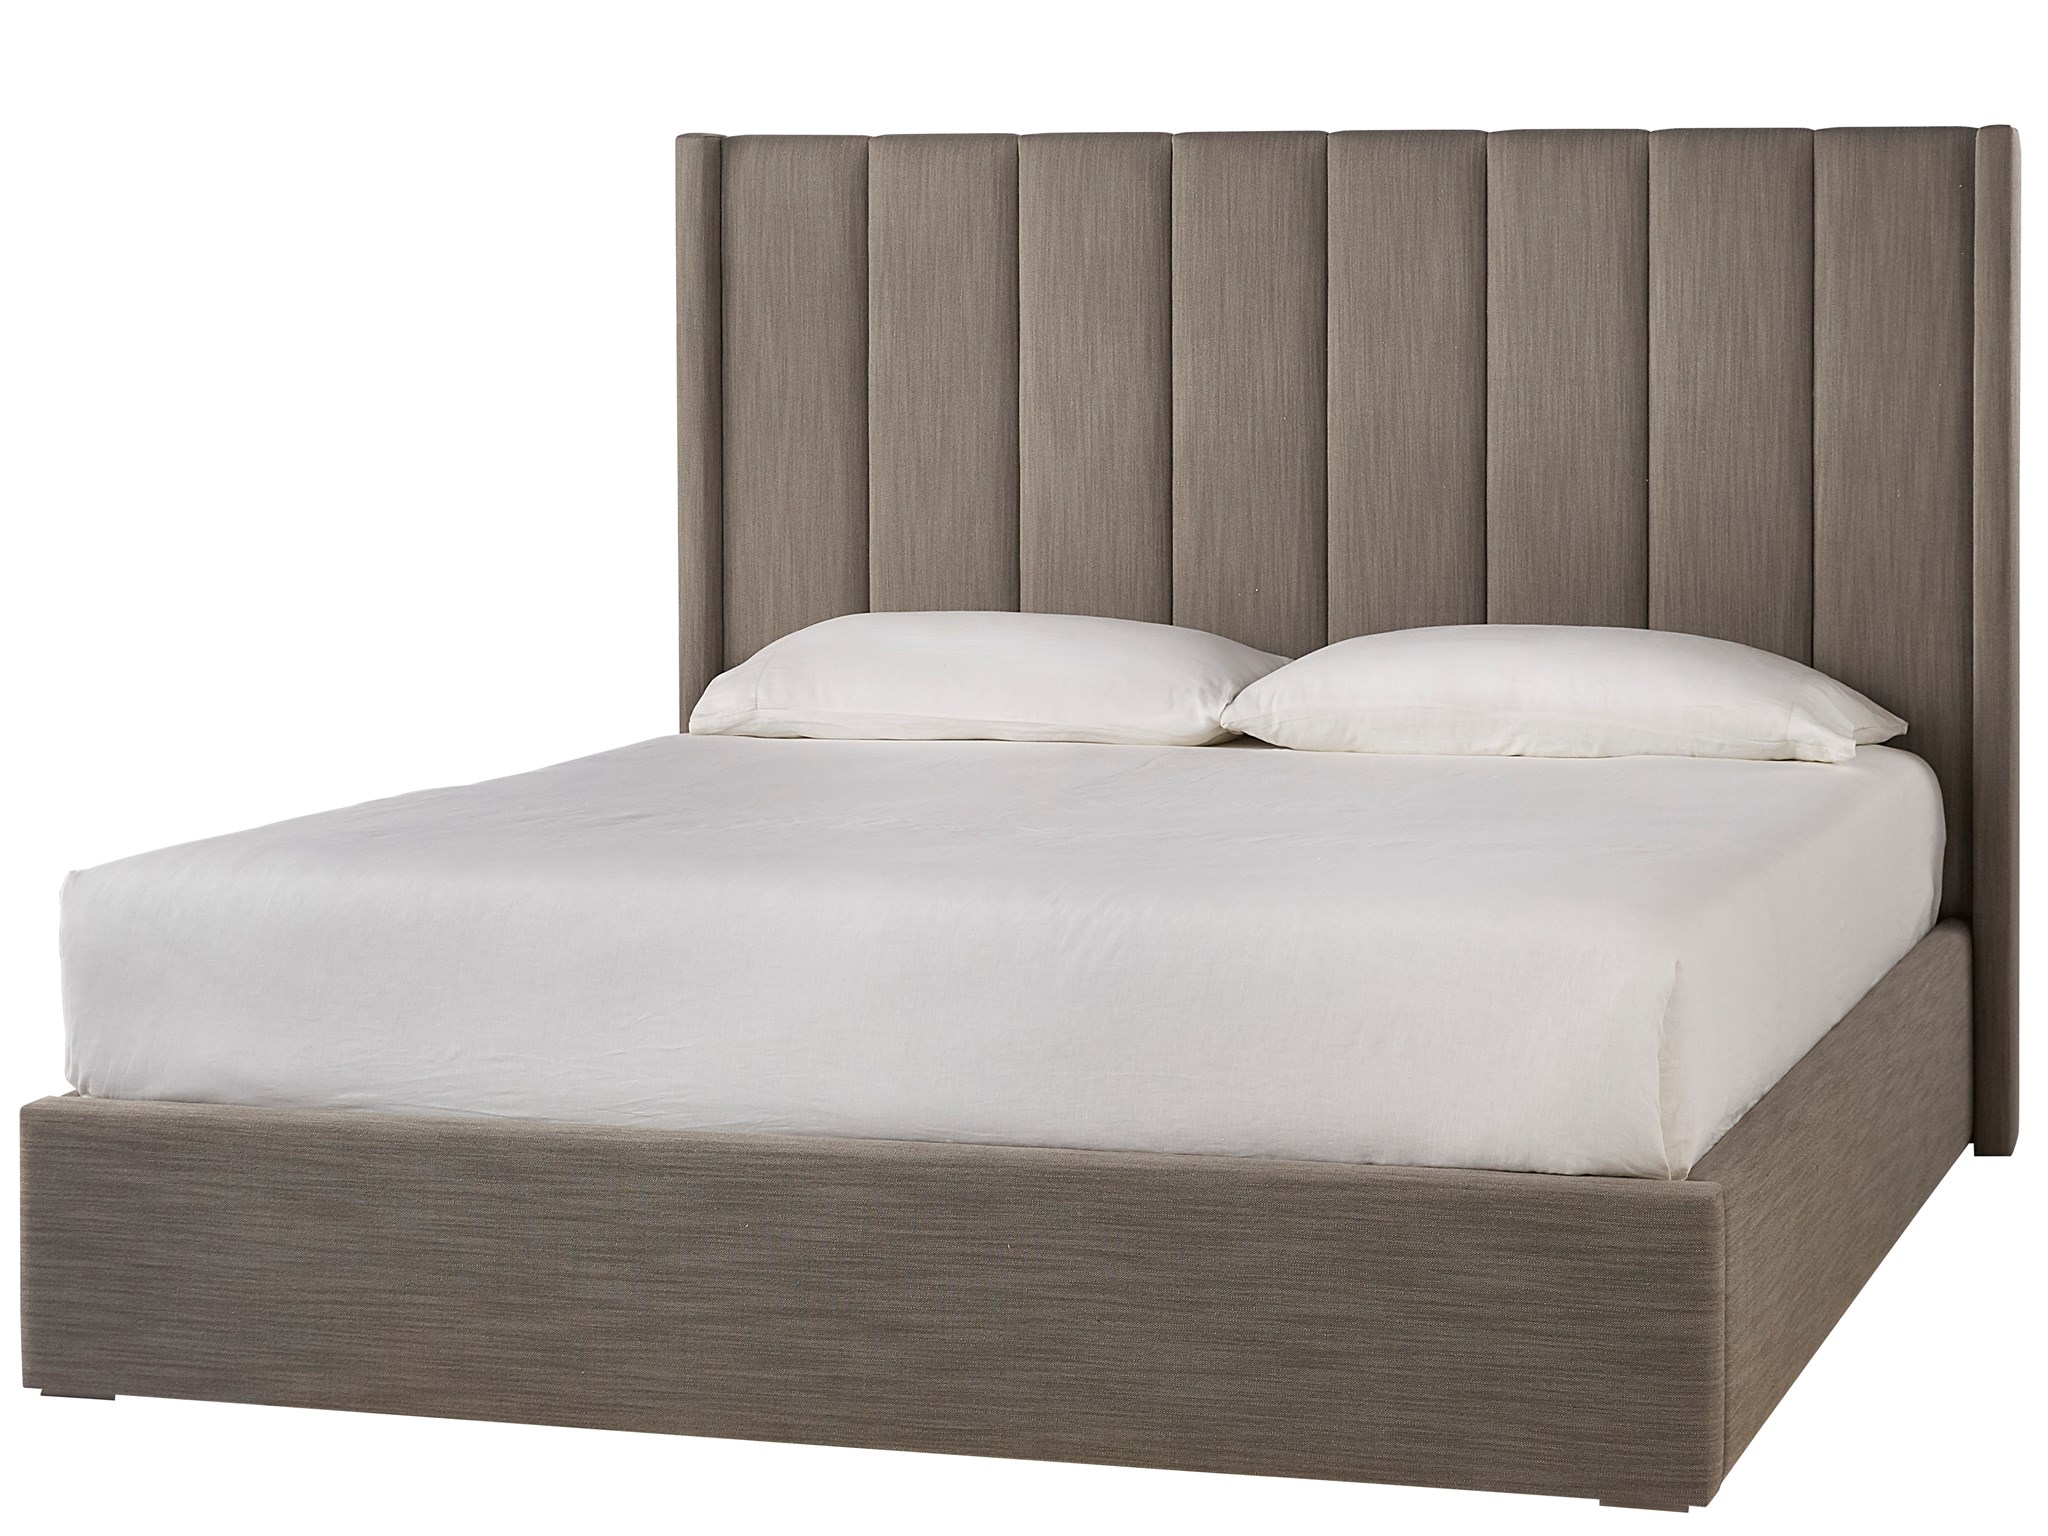 Upholstered Shelter Queen Bed